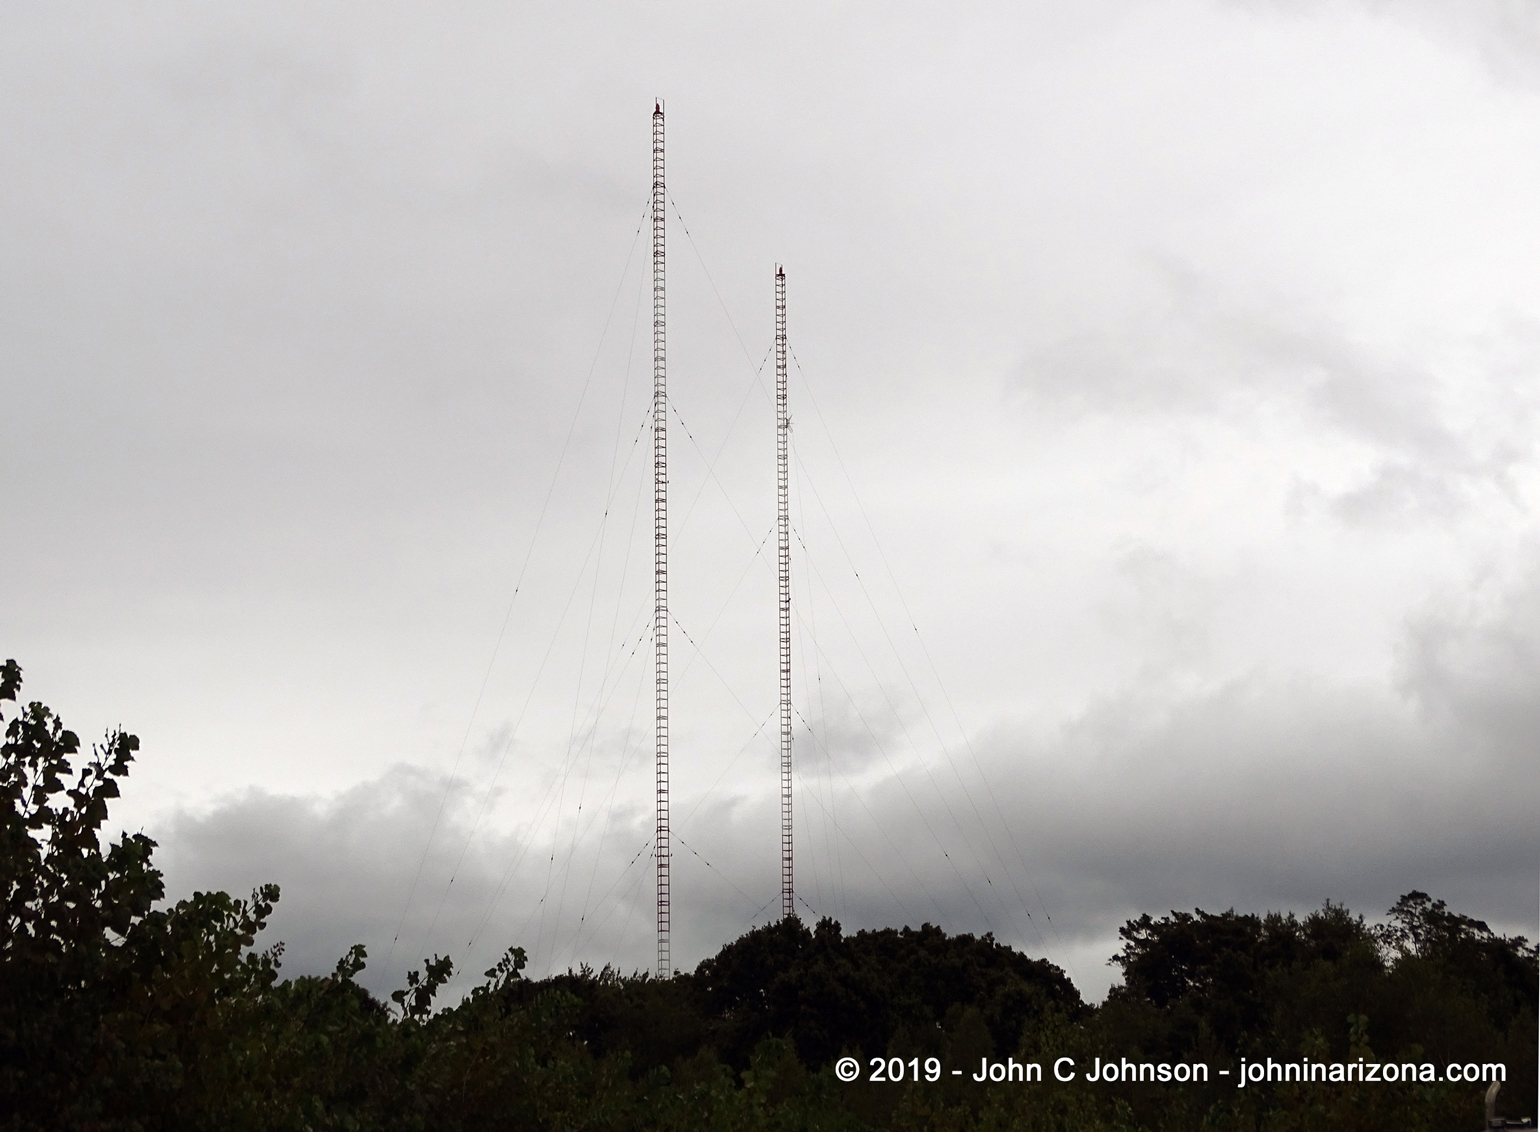 WPRV Radio 790 Providence, Rhode Island